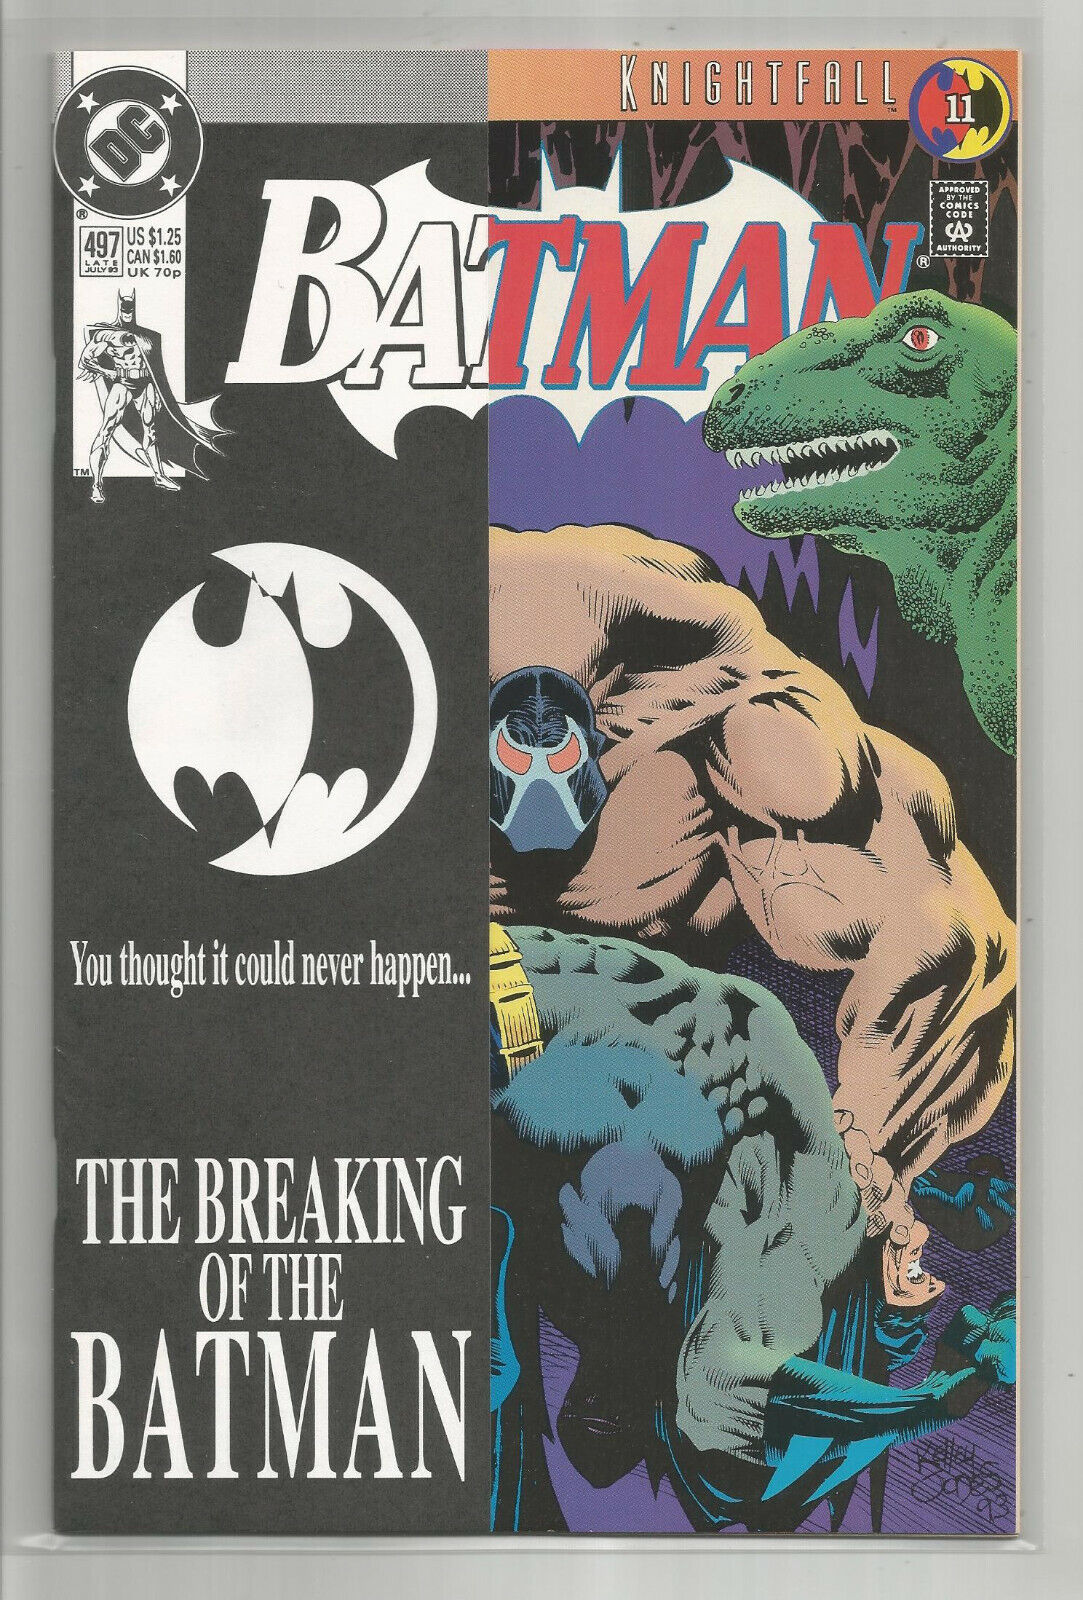 BATMAN # 497 * THE BREAKING OF THE BATMAN * DC COMICS * NEAR MINT 